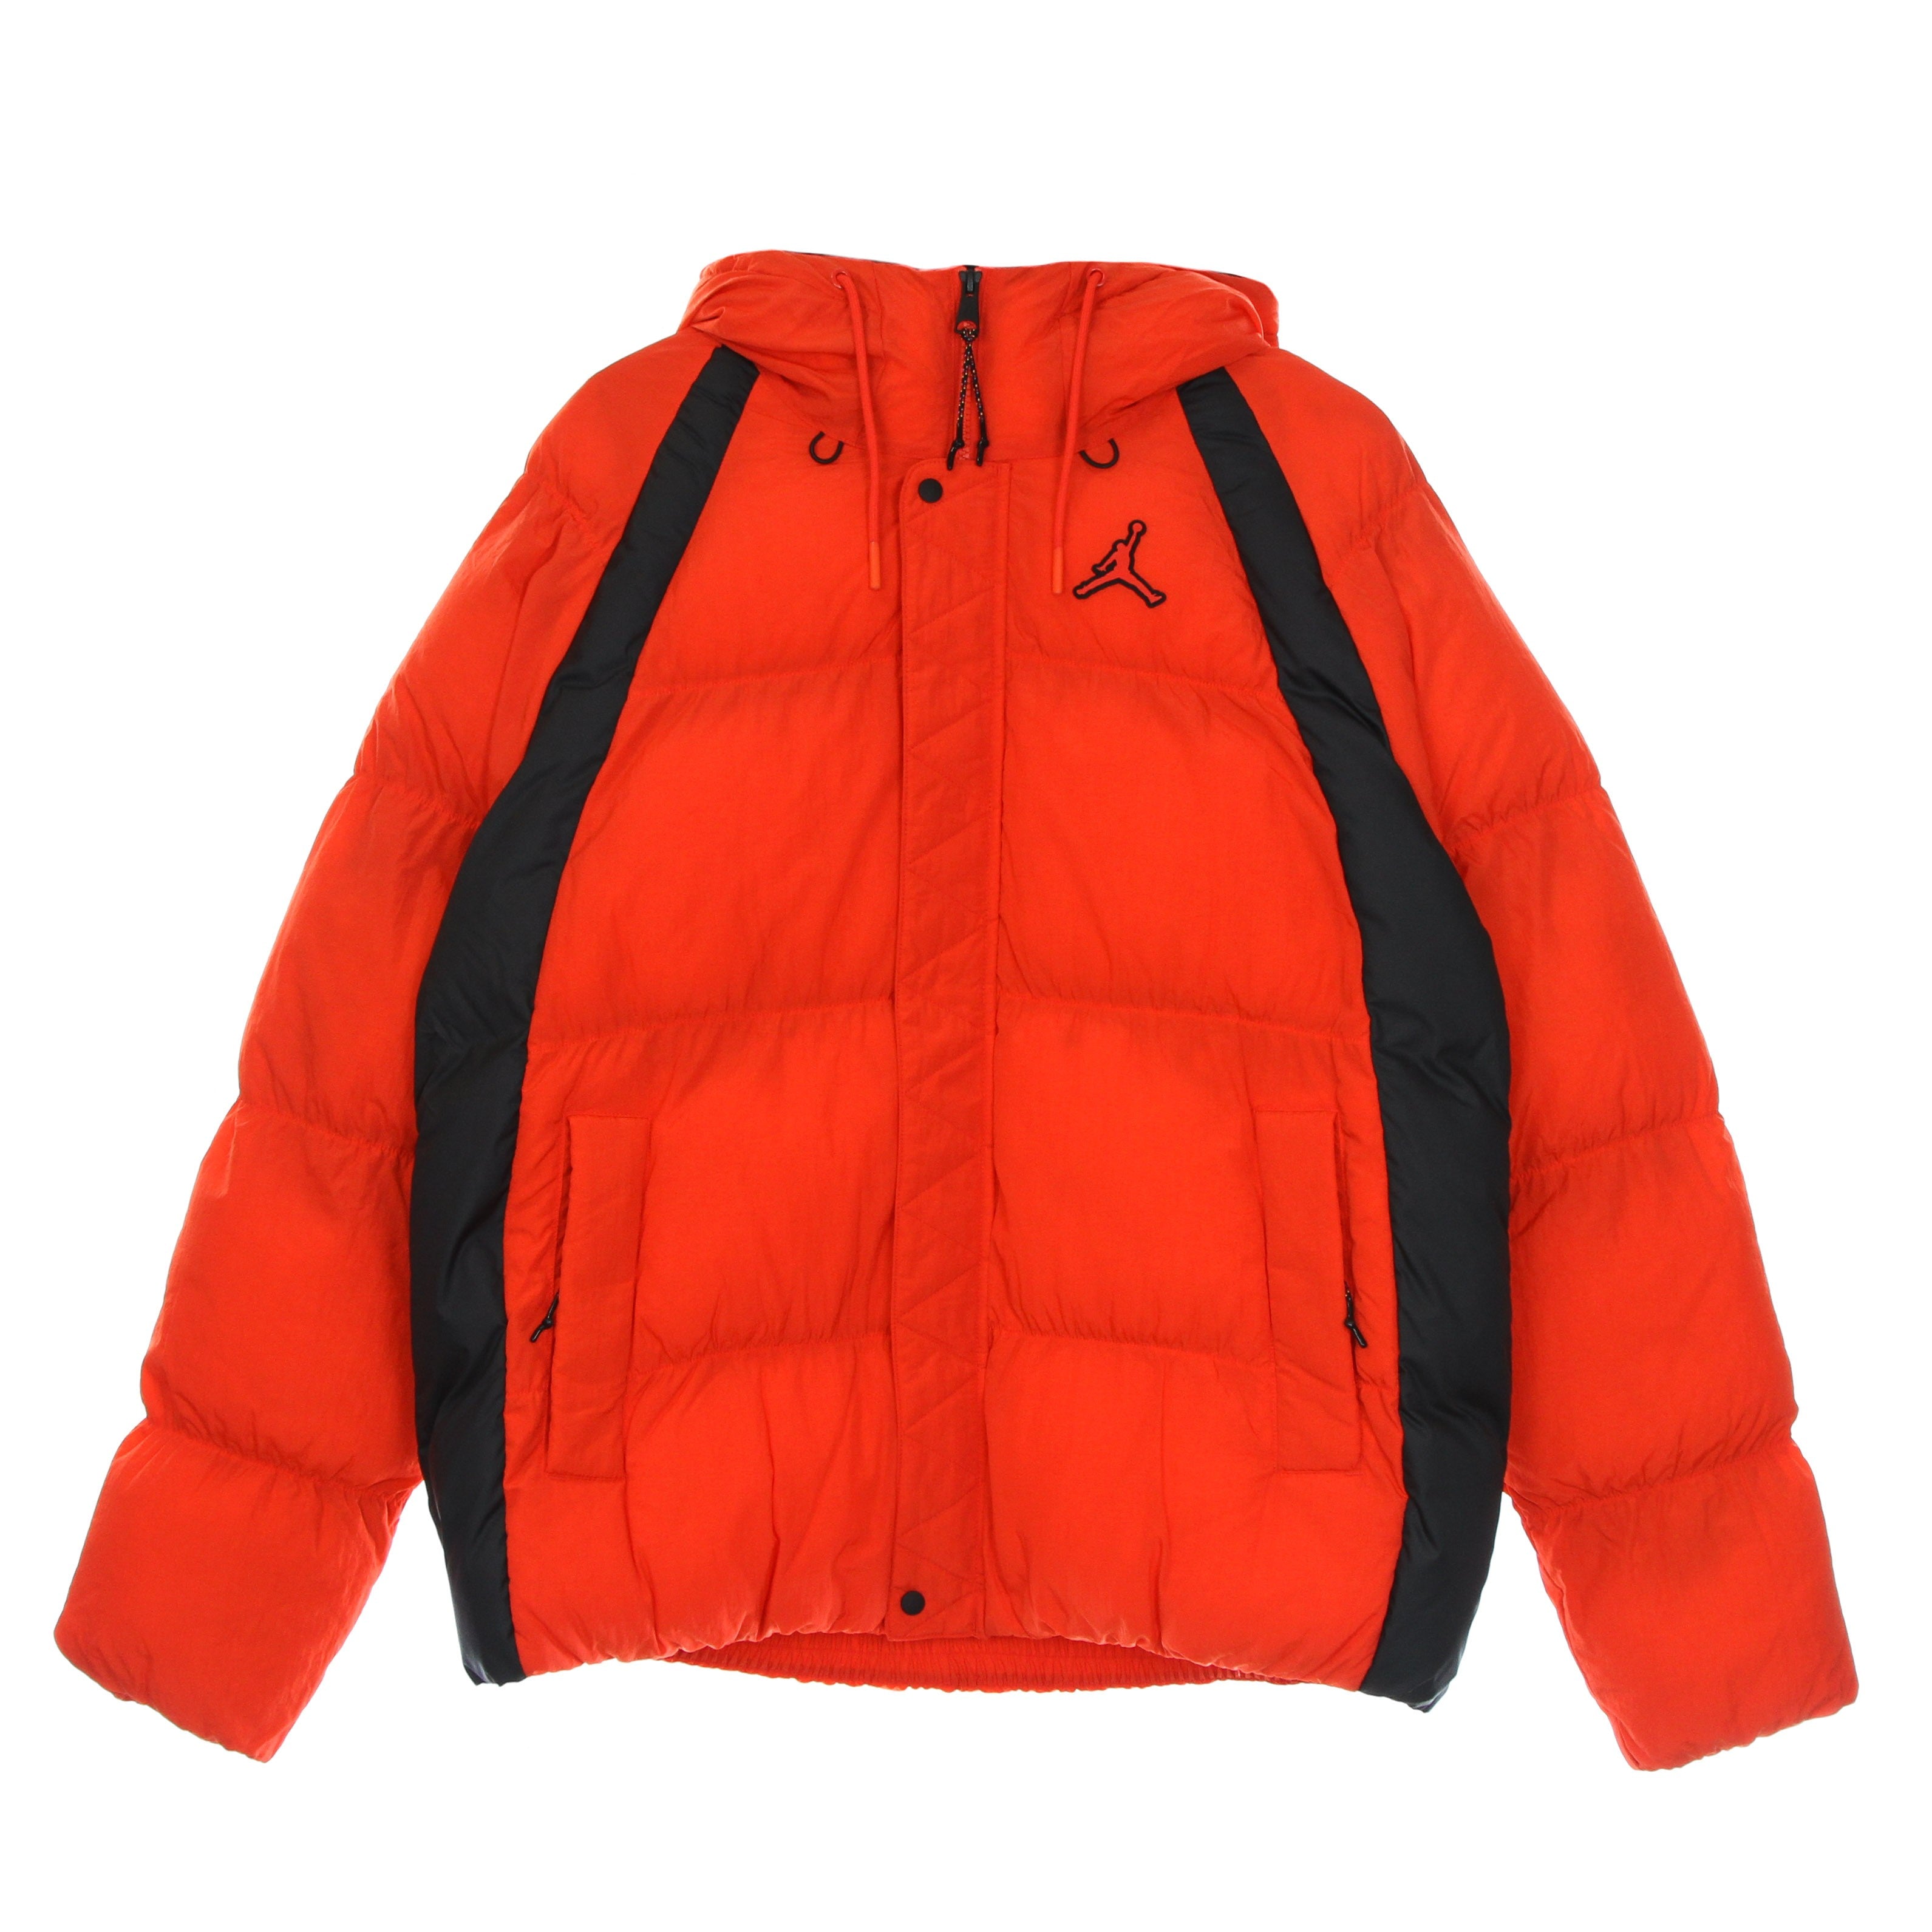 Jordan, Piumino Uomo Essential Puffer Jacket, Chile Red